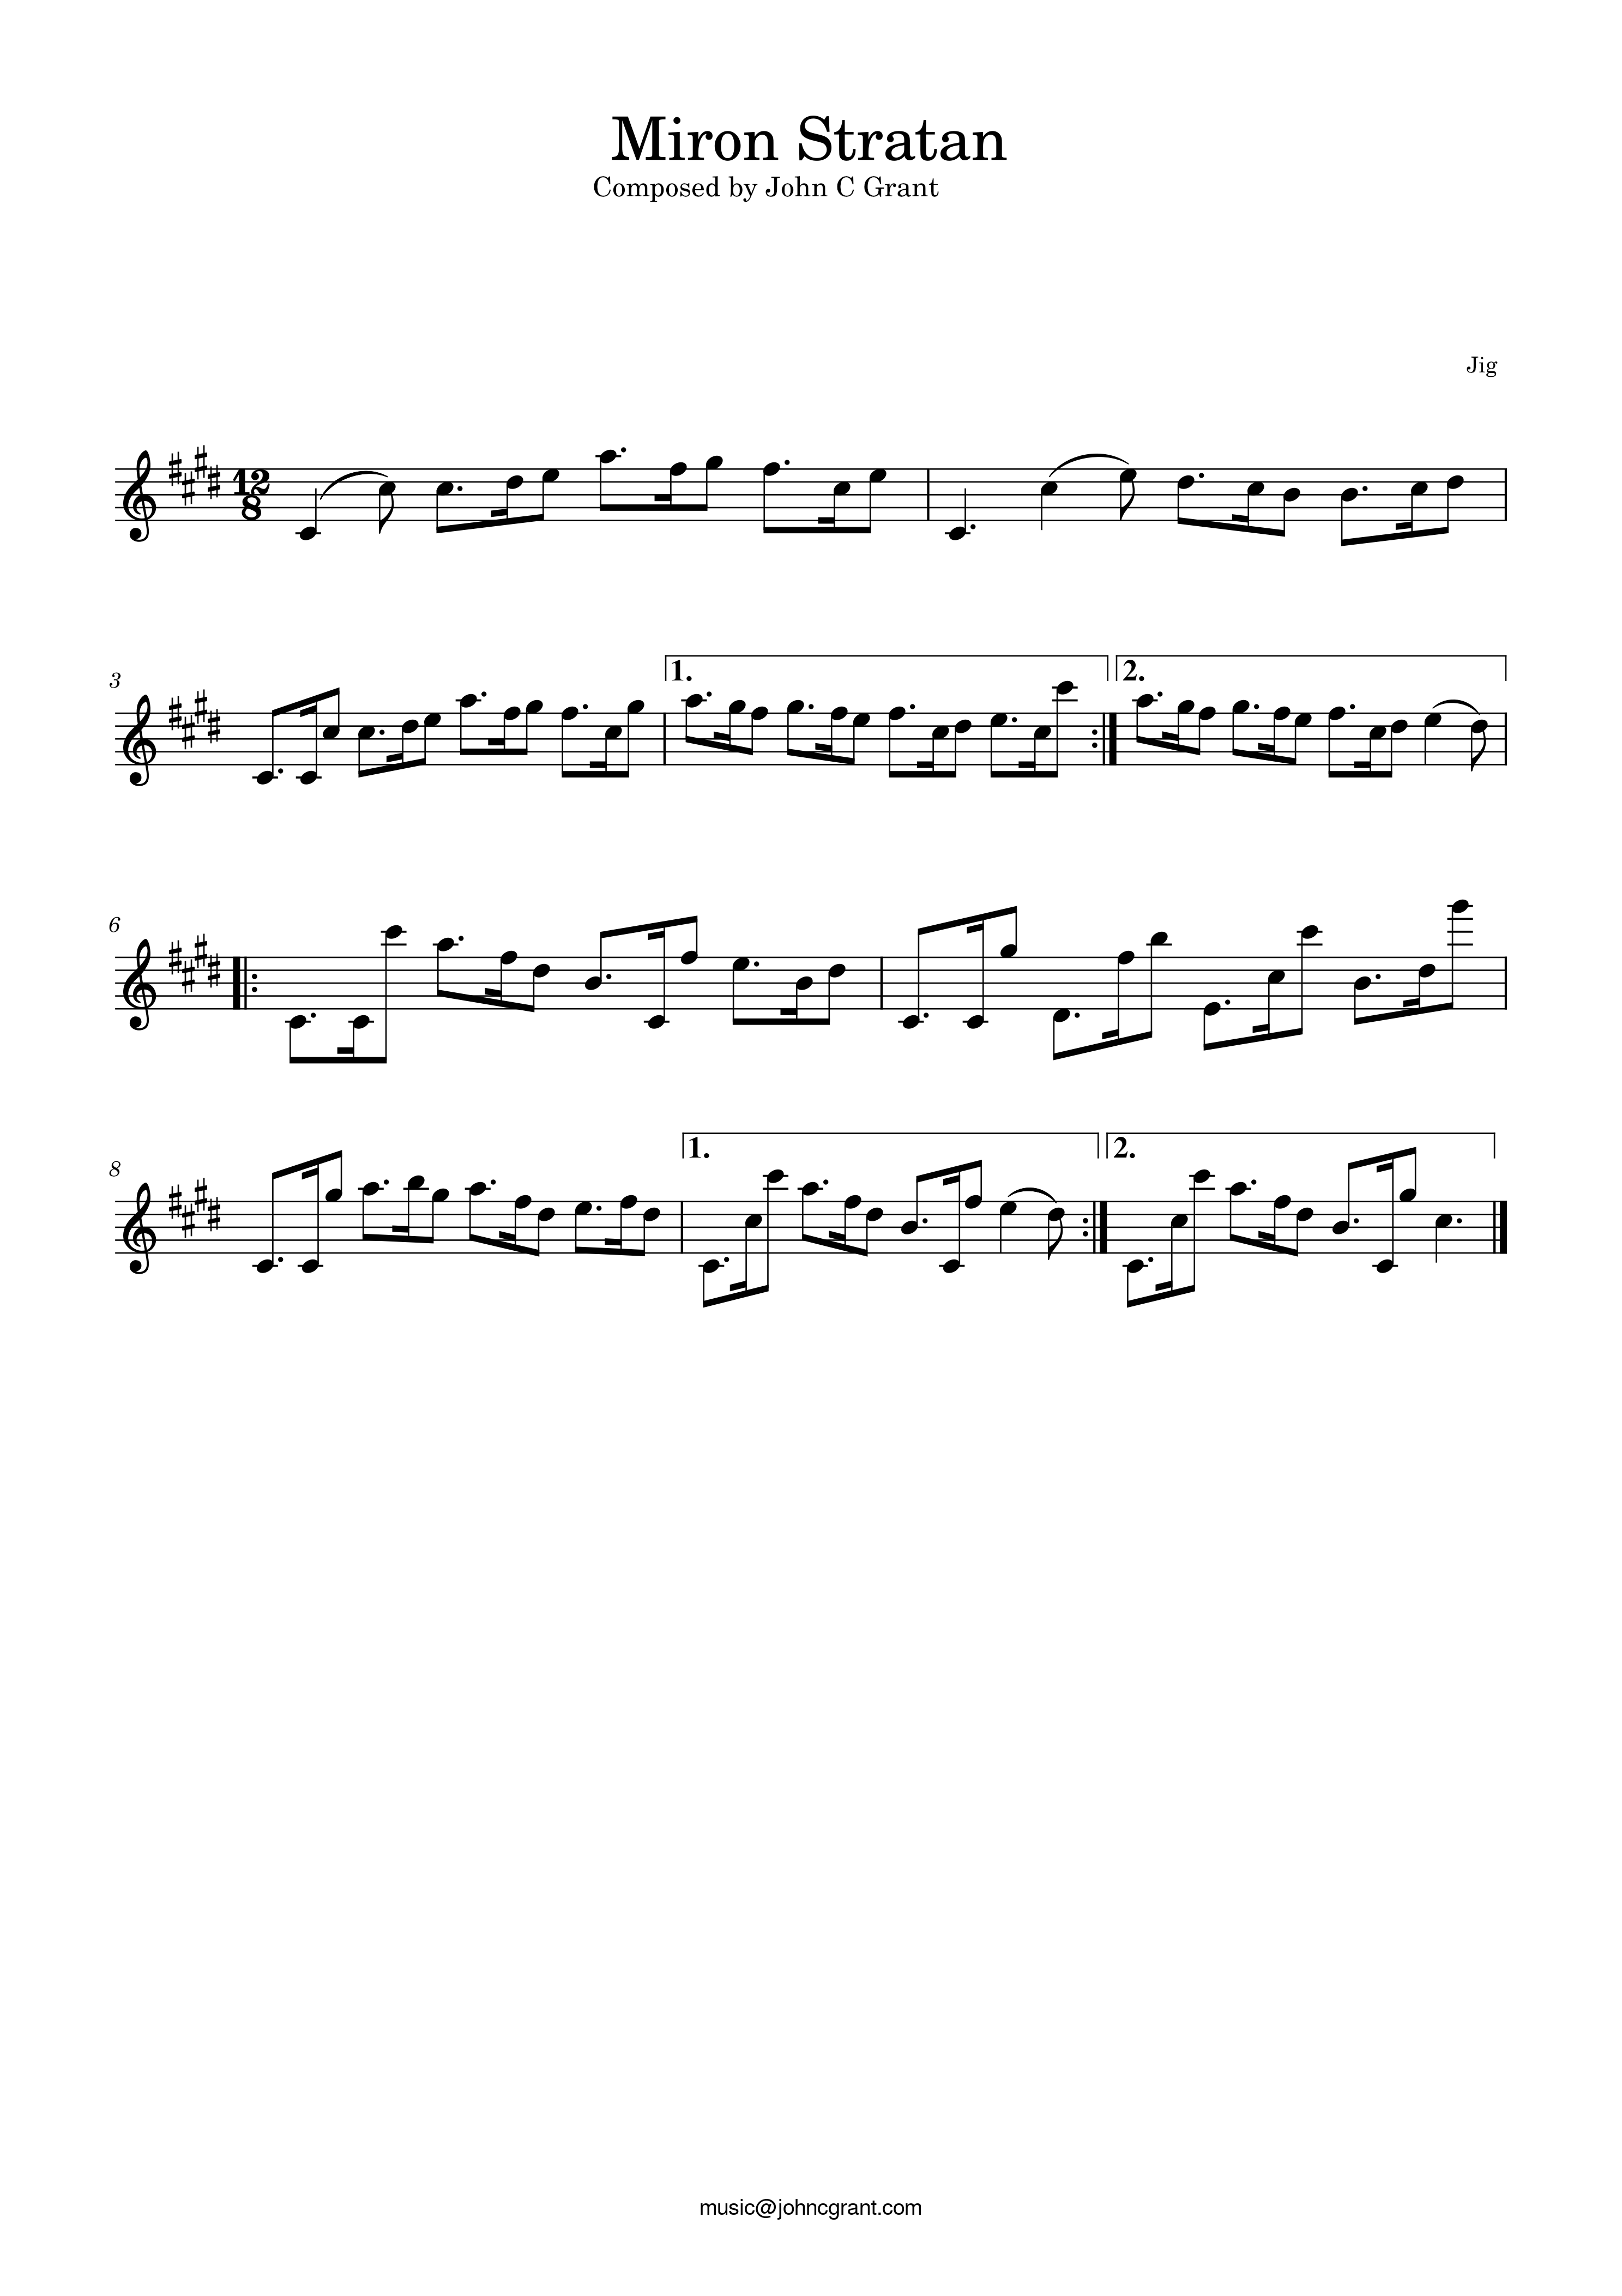 Miron Stratan - Composed by John C Grant (https://johncgrant.com). Traditional composer from Kilmarnock, Ayrshire, Scotland.